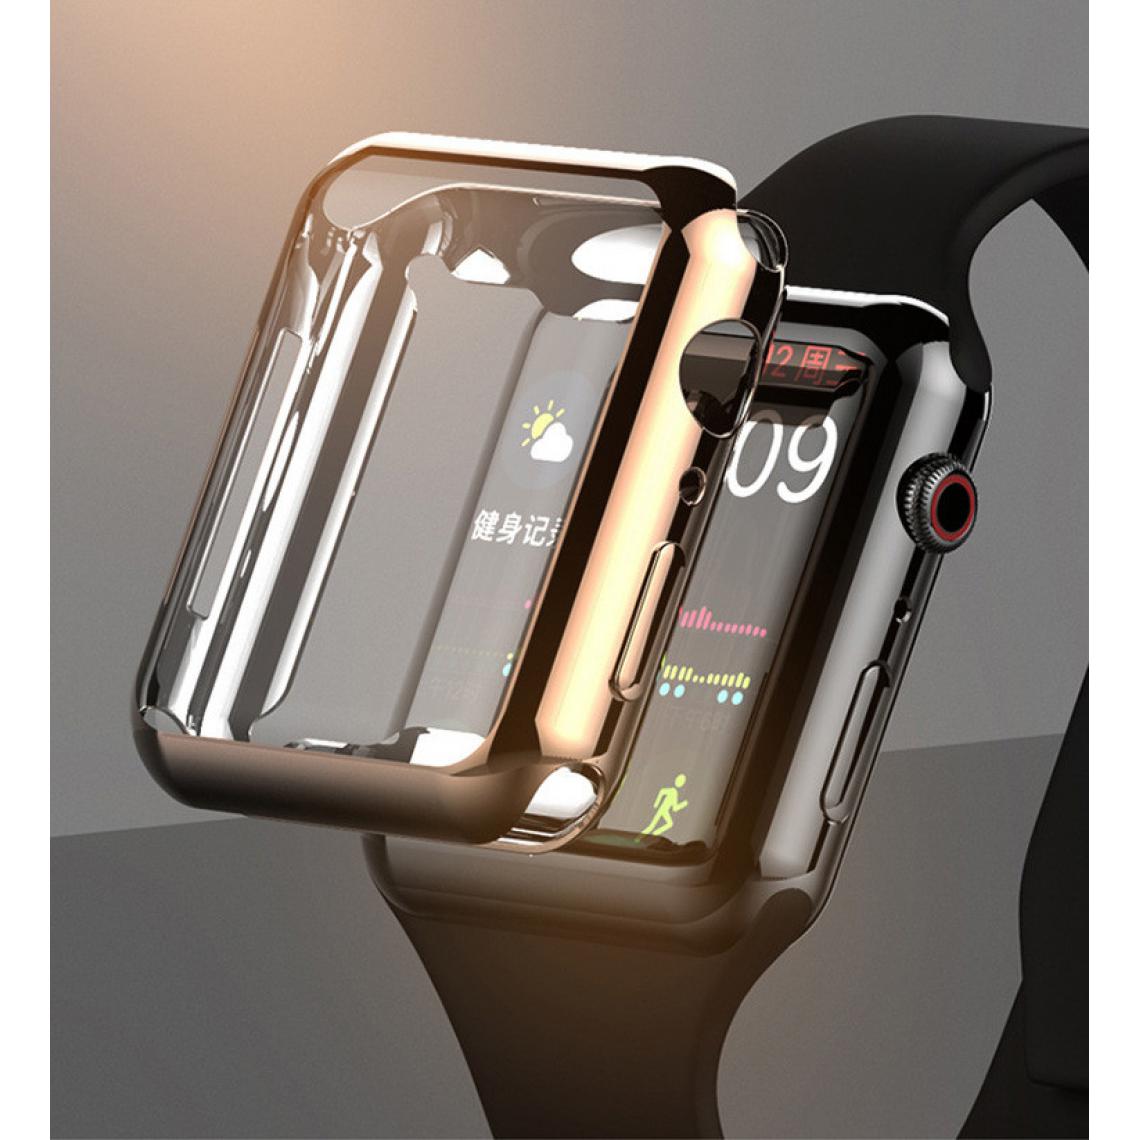 Shot - Coque Silicone 44mm pour IWATCH Serie 1 APPLE Bumper Protection Tactile (OR) - Accessoires montres connectées